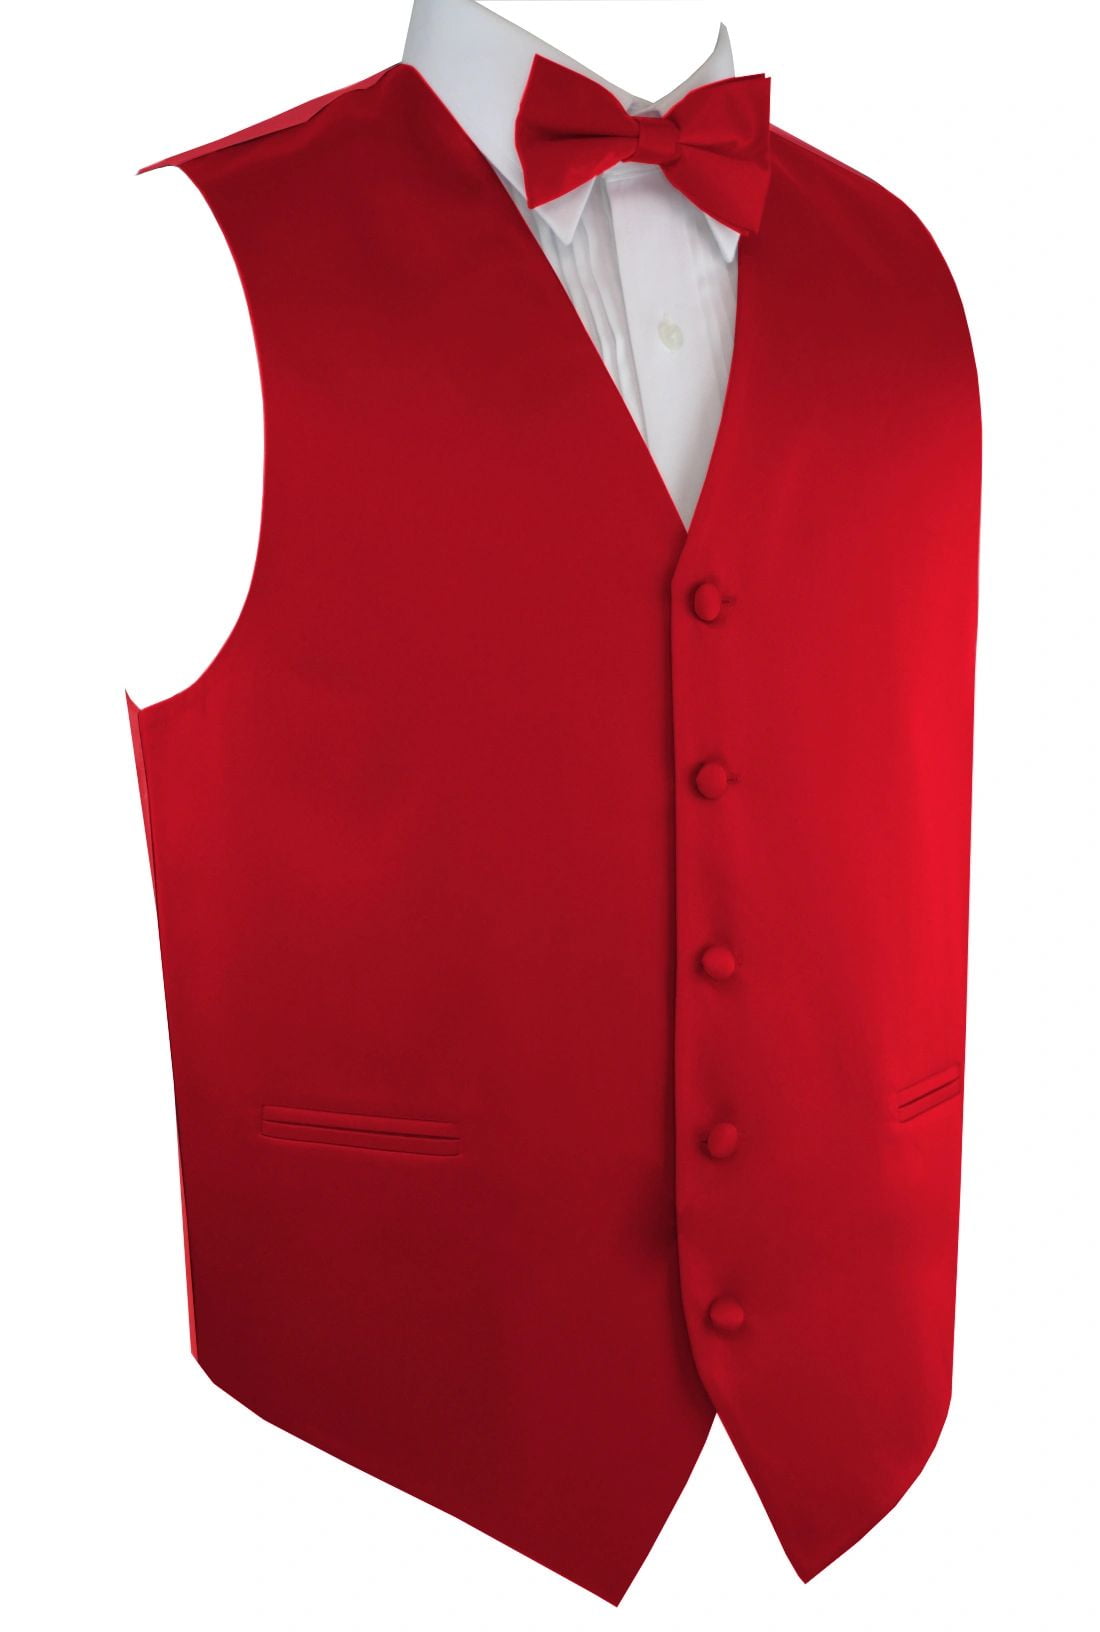 New Men's stripes Tuxedo Vest Waistcoat & necktie & Bow tie & Hankie Red formal 